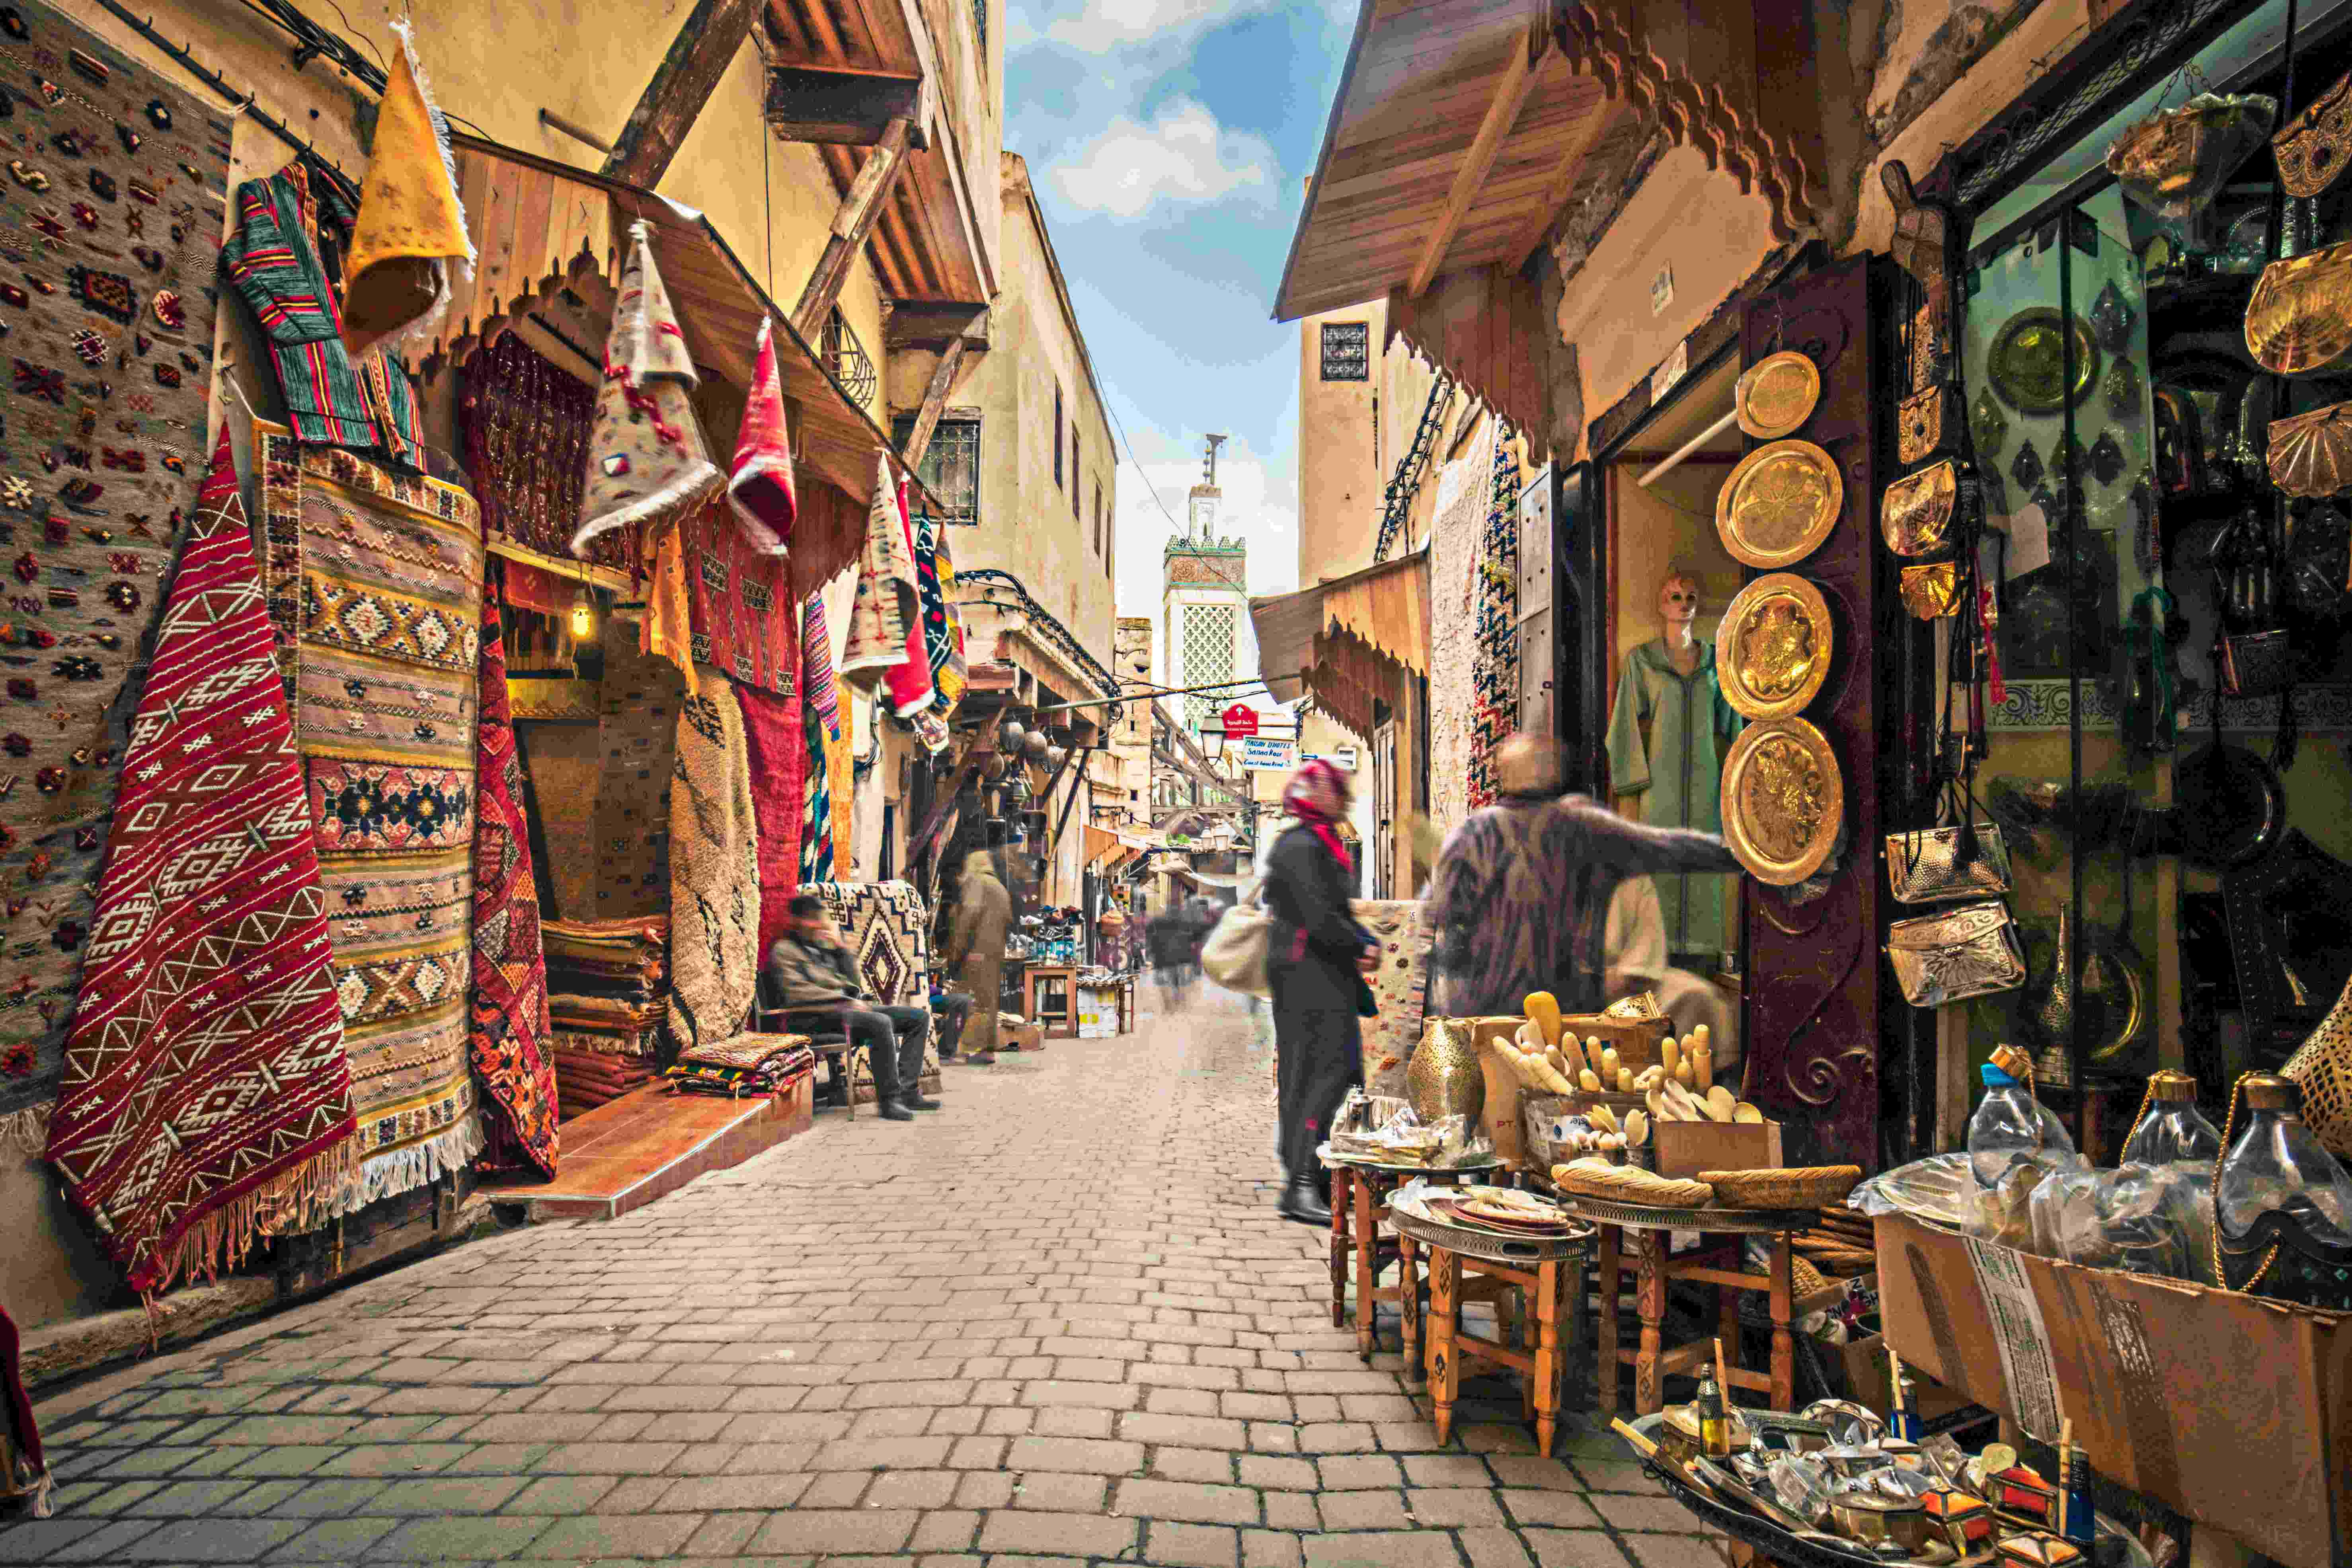 Старый город базар. Медина города Марракеш, Марокко. Марокко Фес Медина. Марокко рынок Марракеш. Марокко базар Фес.